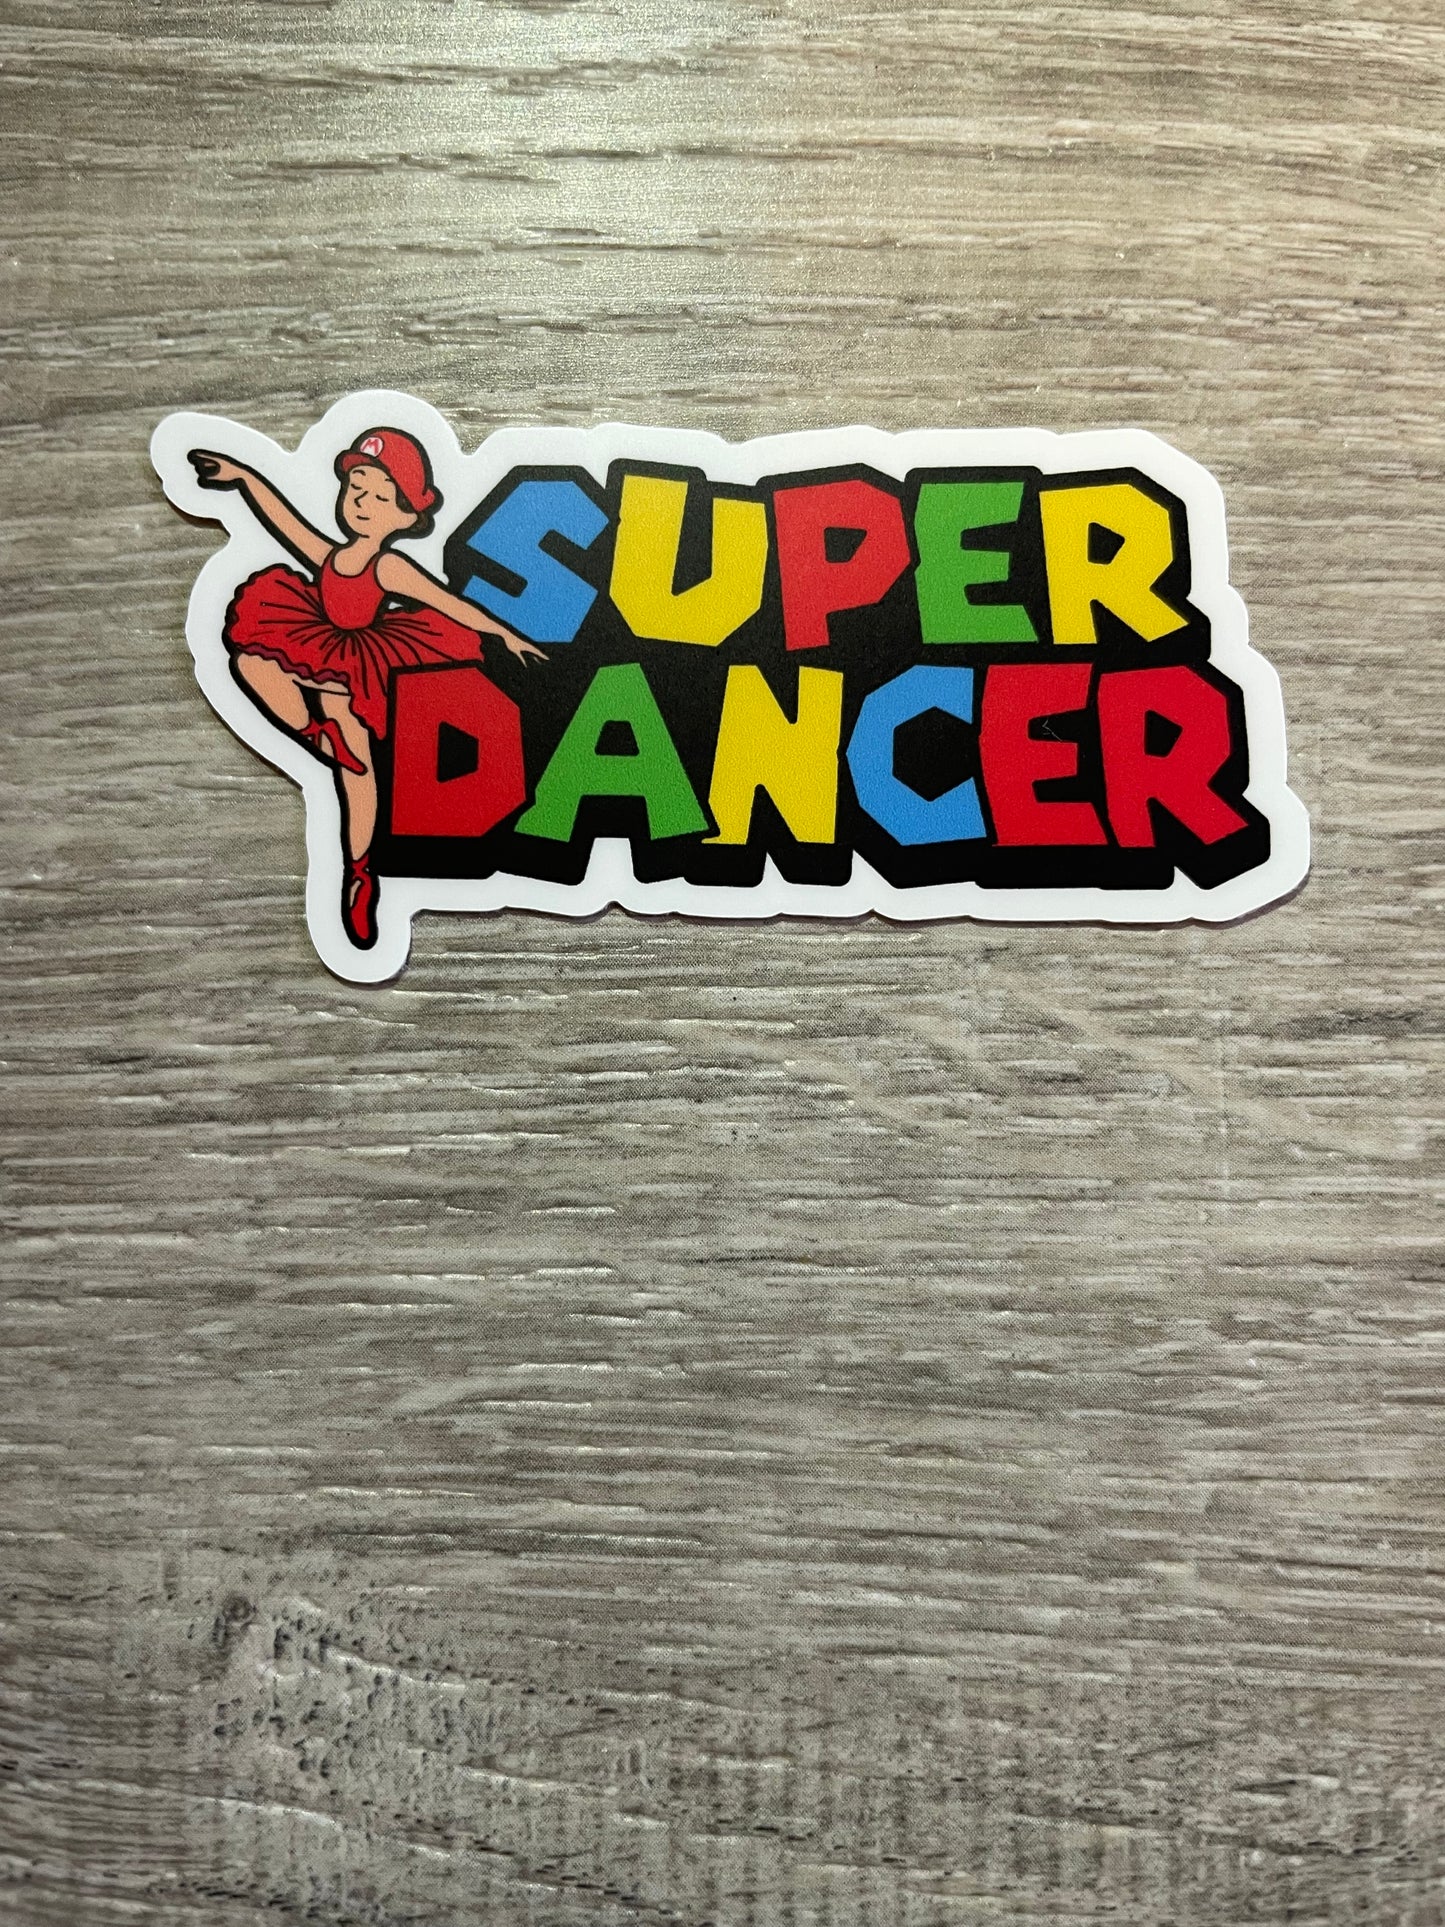 Super Dancer w/ Character Dancer Parody Sticker, 3" x 1.6"